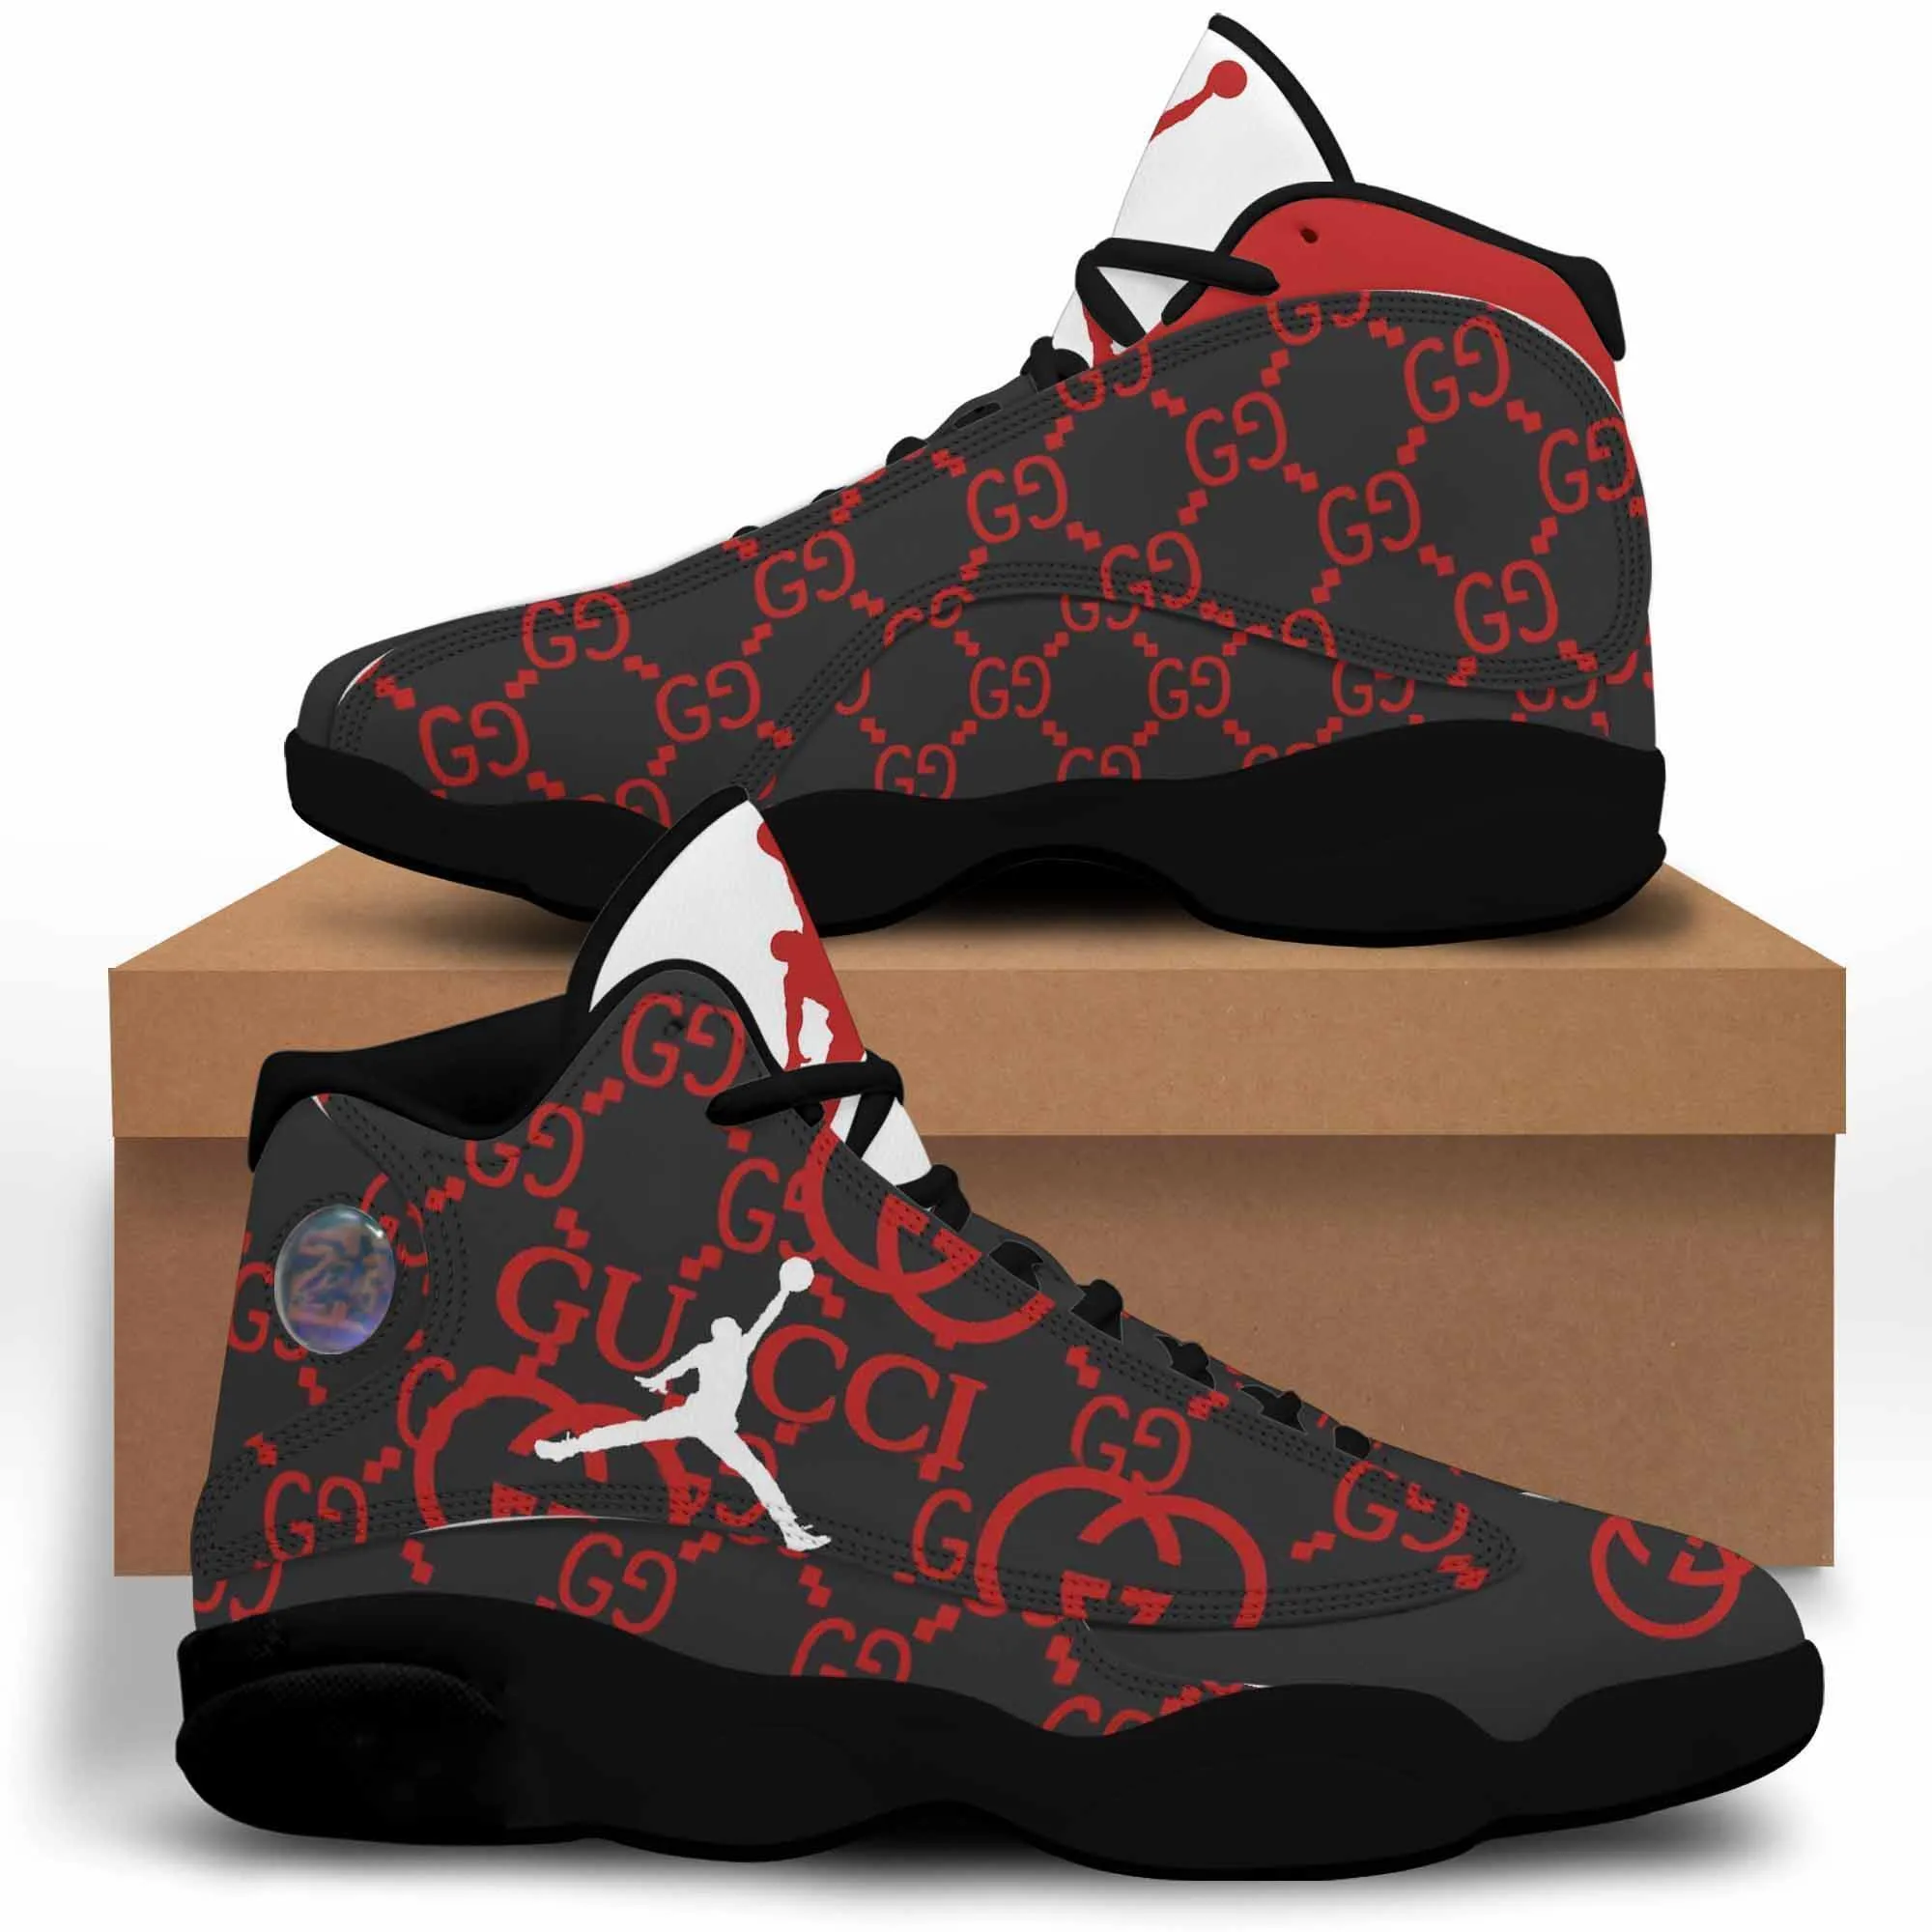 Gucci Black Red Air Jordan 13 Sneakers Trending Luxury Fashion Shoes